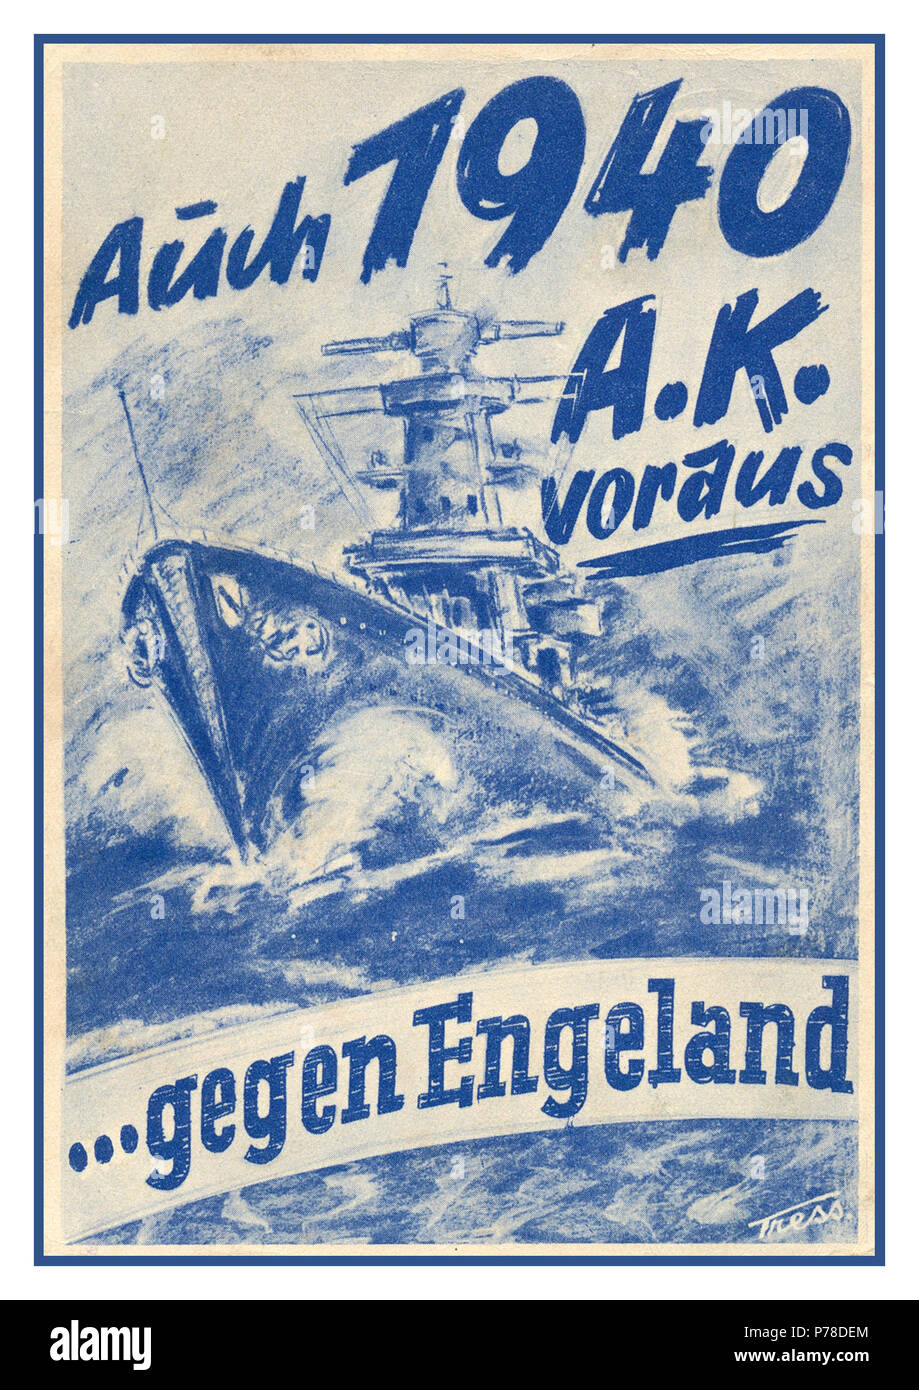 1940 German Naval Kriegsmarine Vintage Propaganda Postcard Bremen commemorative warship card 1940 'Also 1940 ahead against England'  WW2 propaganda card. Stock Photo